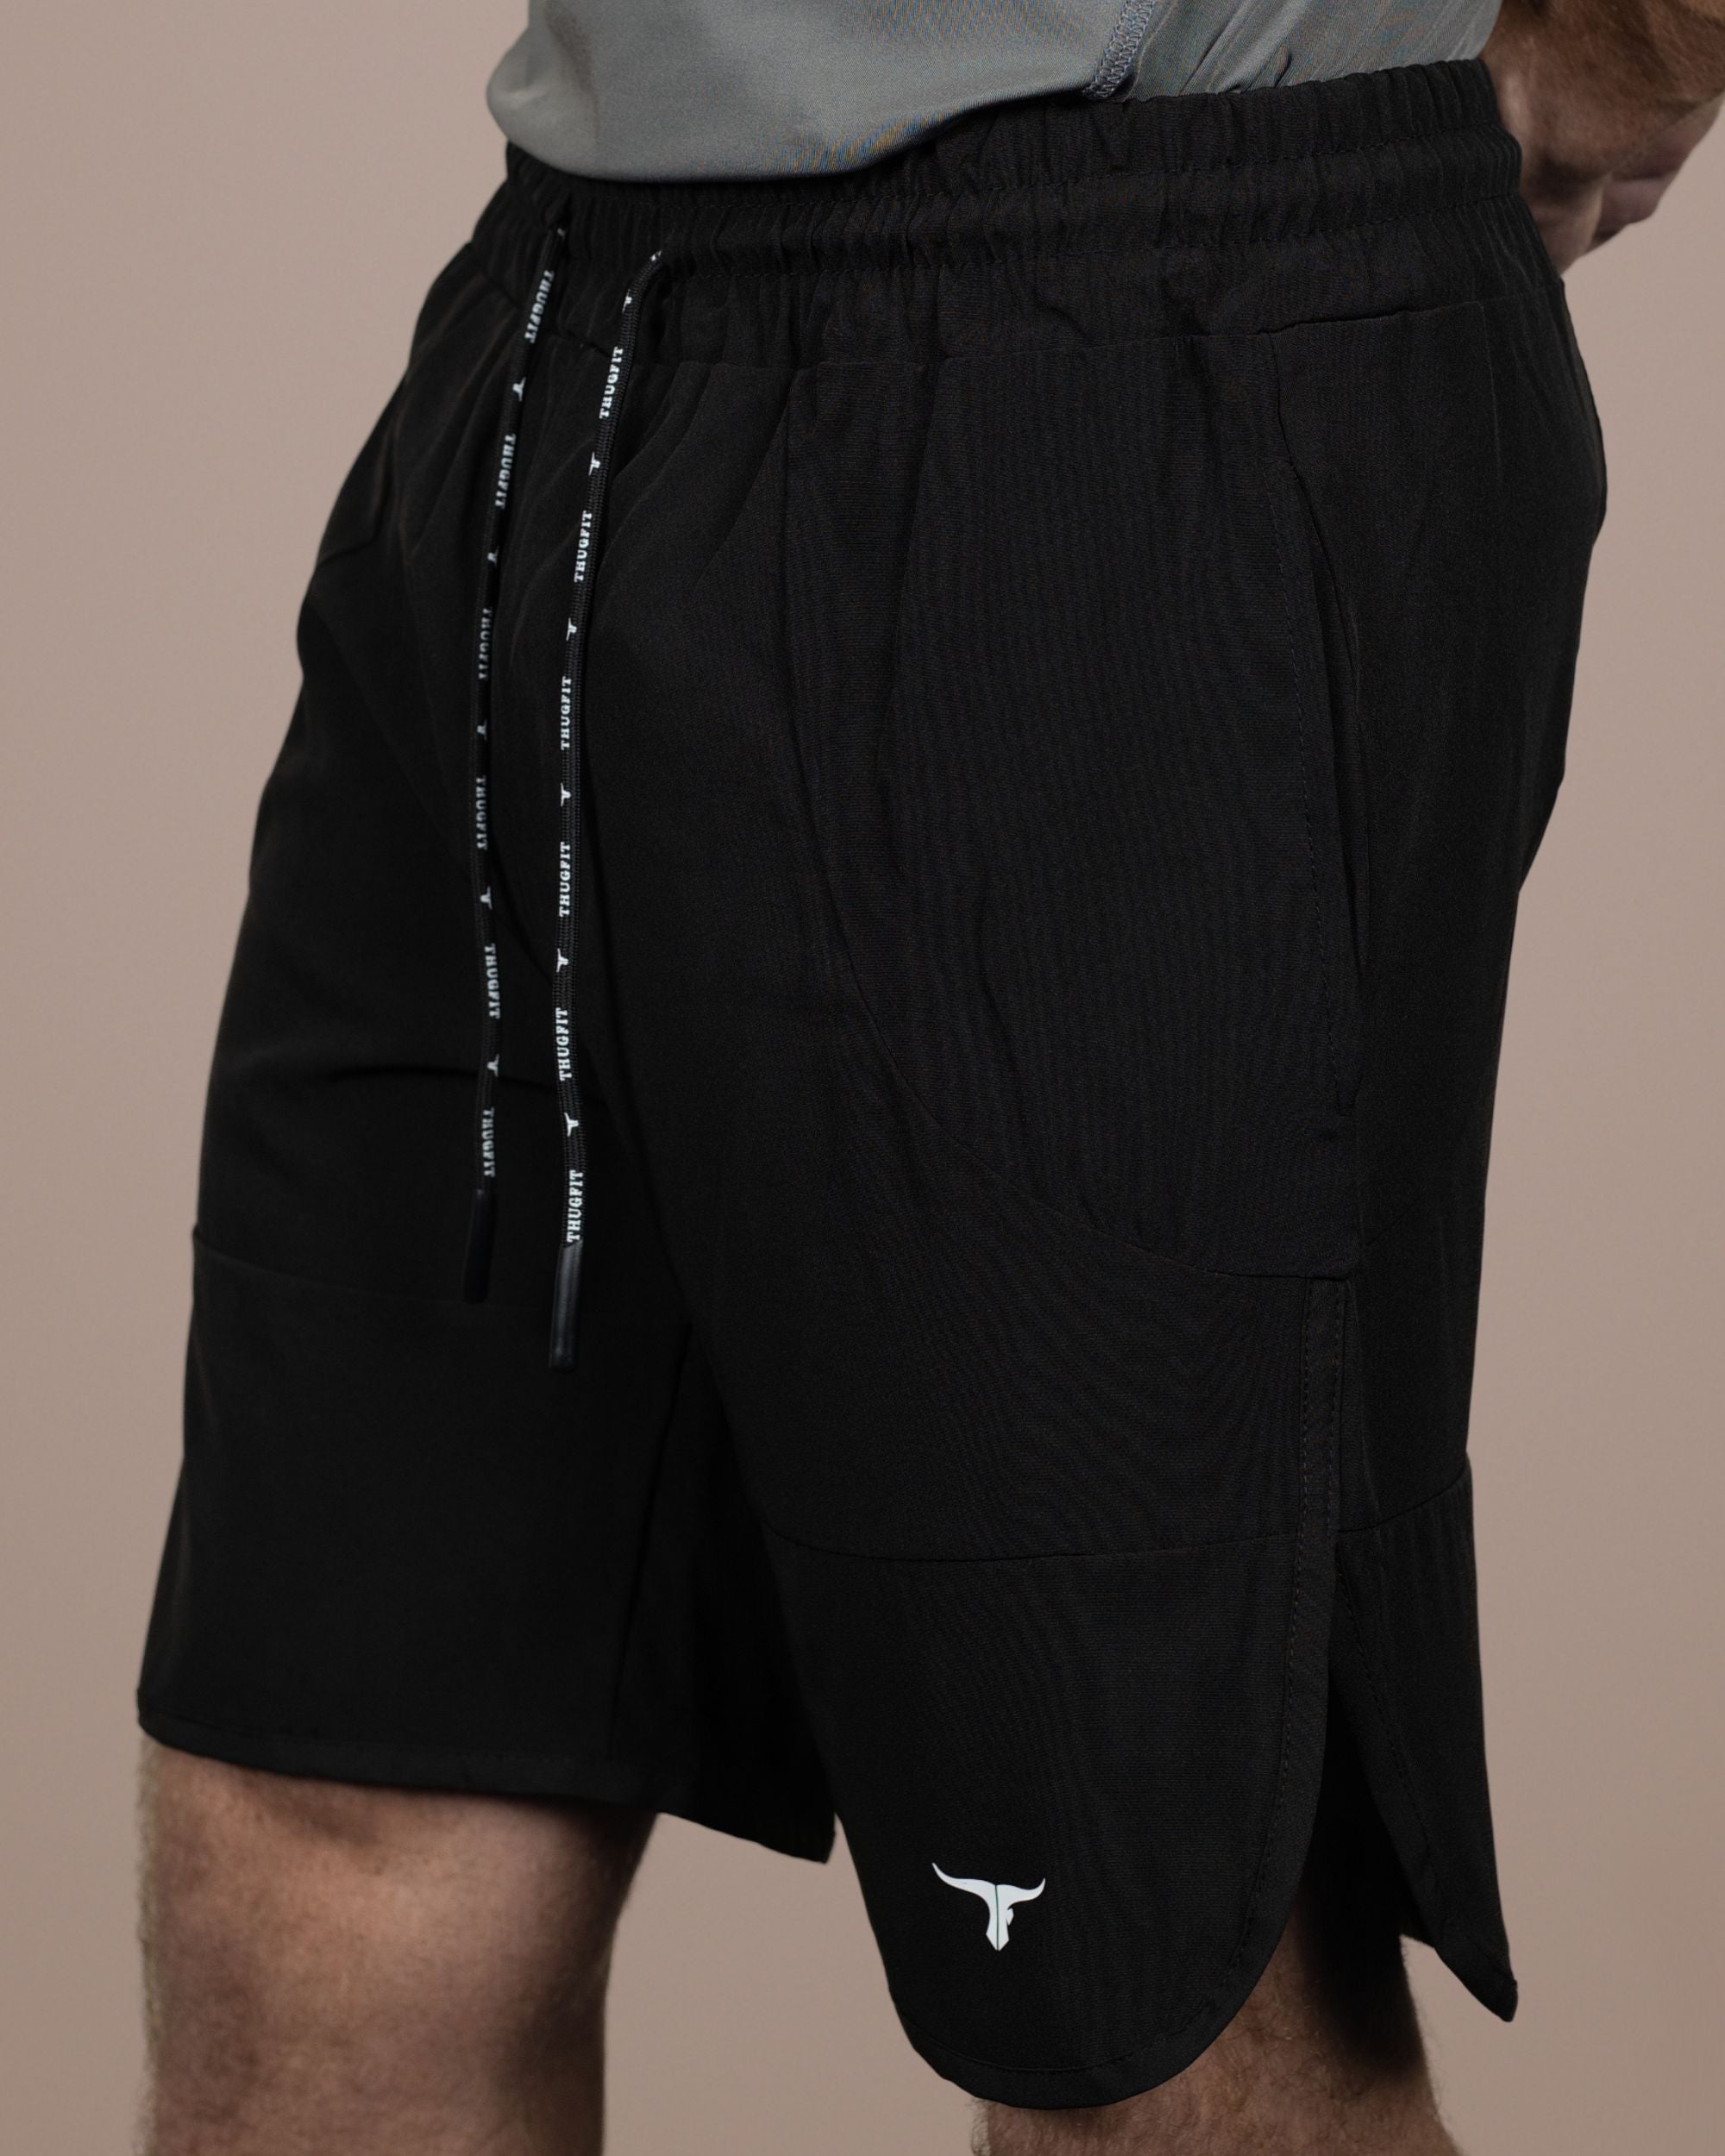 THUGFIT BlackHawk High-performance Men's Shorts (9" Inseam) - Black - THUGFIT